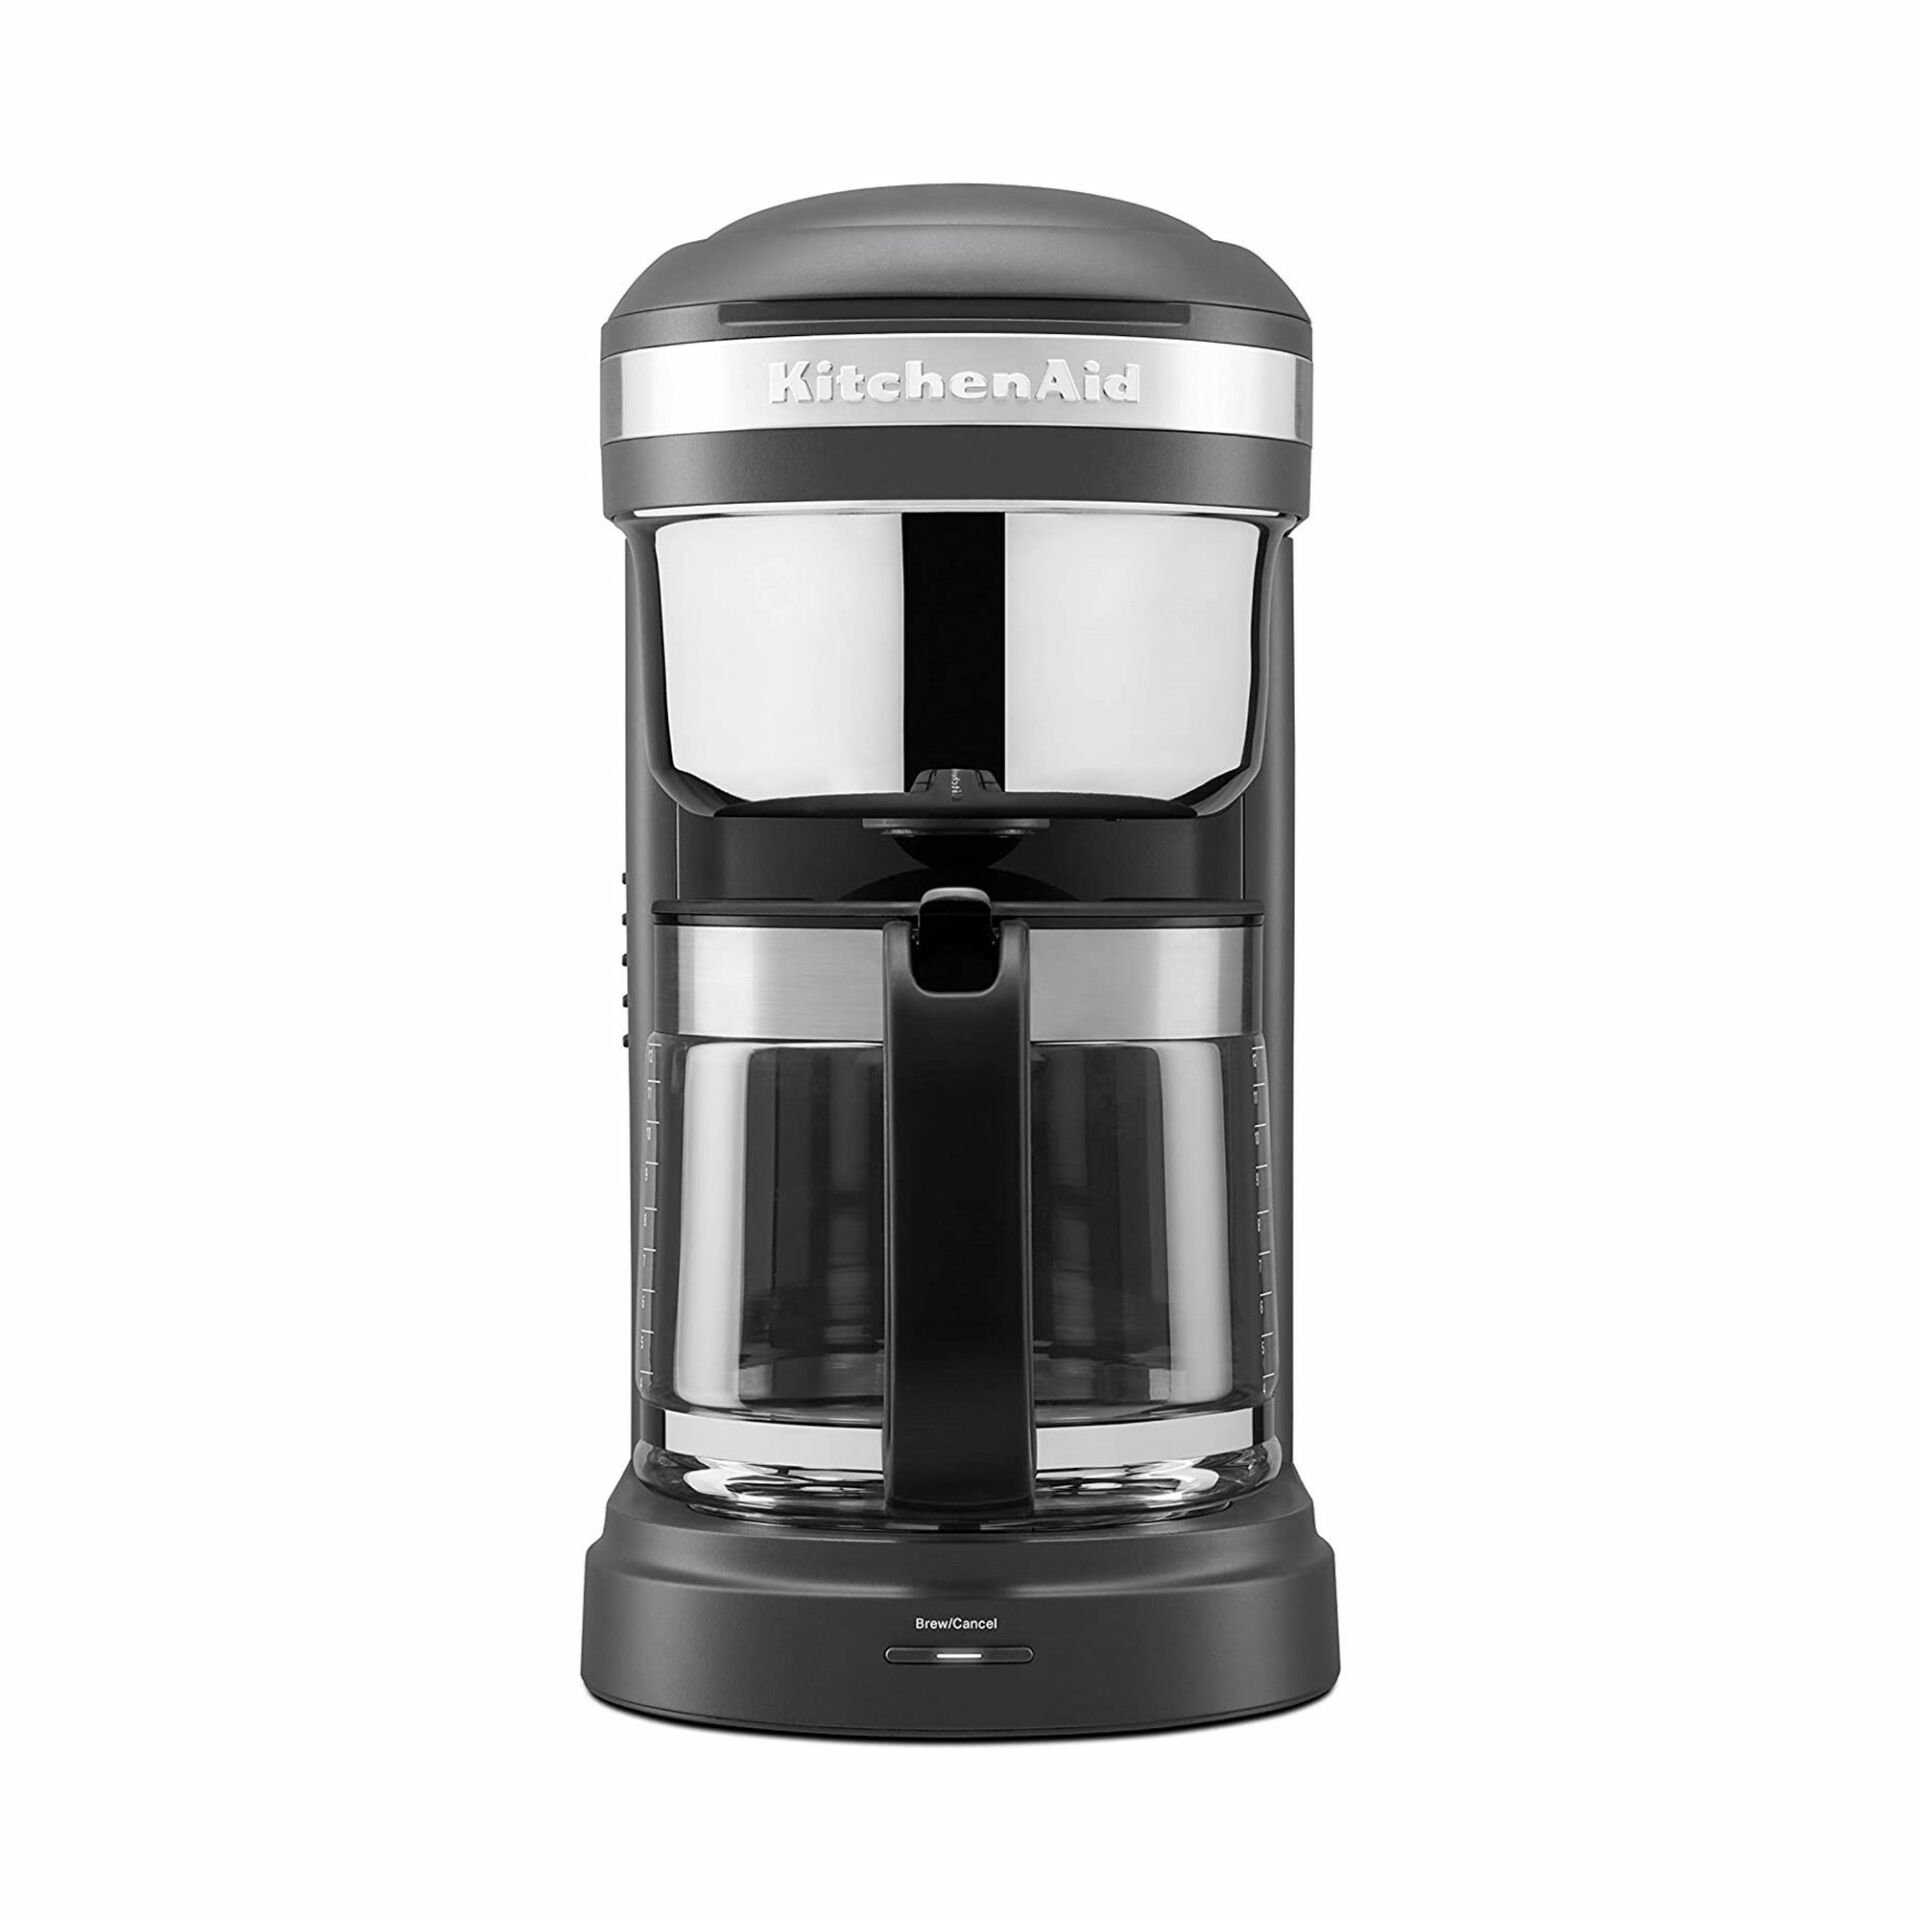 KitchenAid Filtre Kahve Makinesi 5KCM1209 - Charcoal Grey